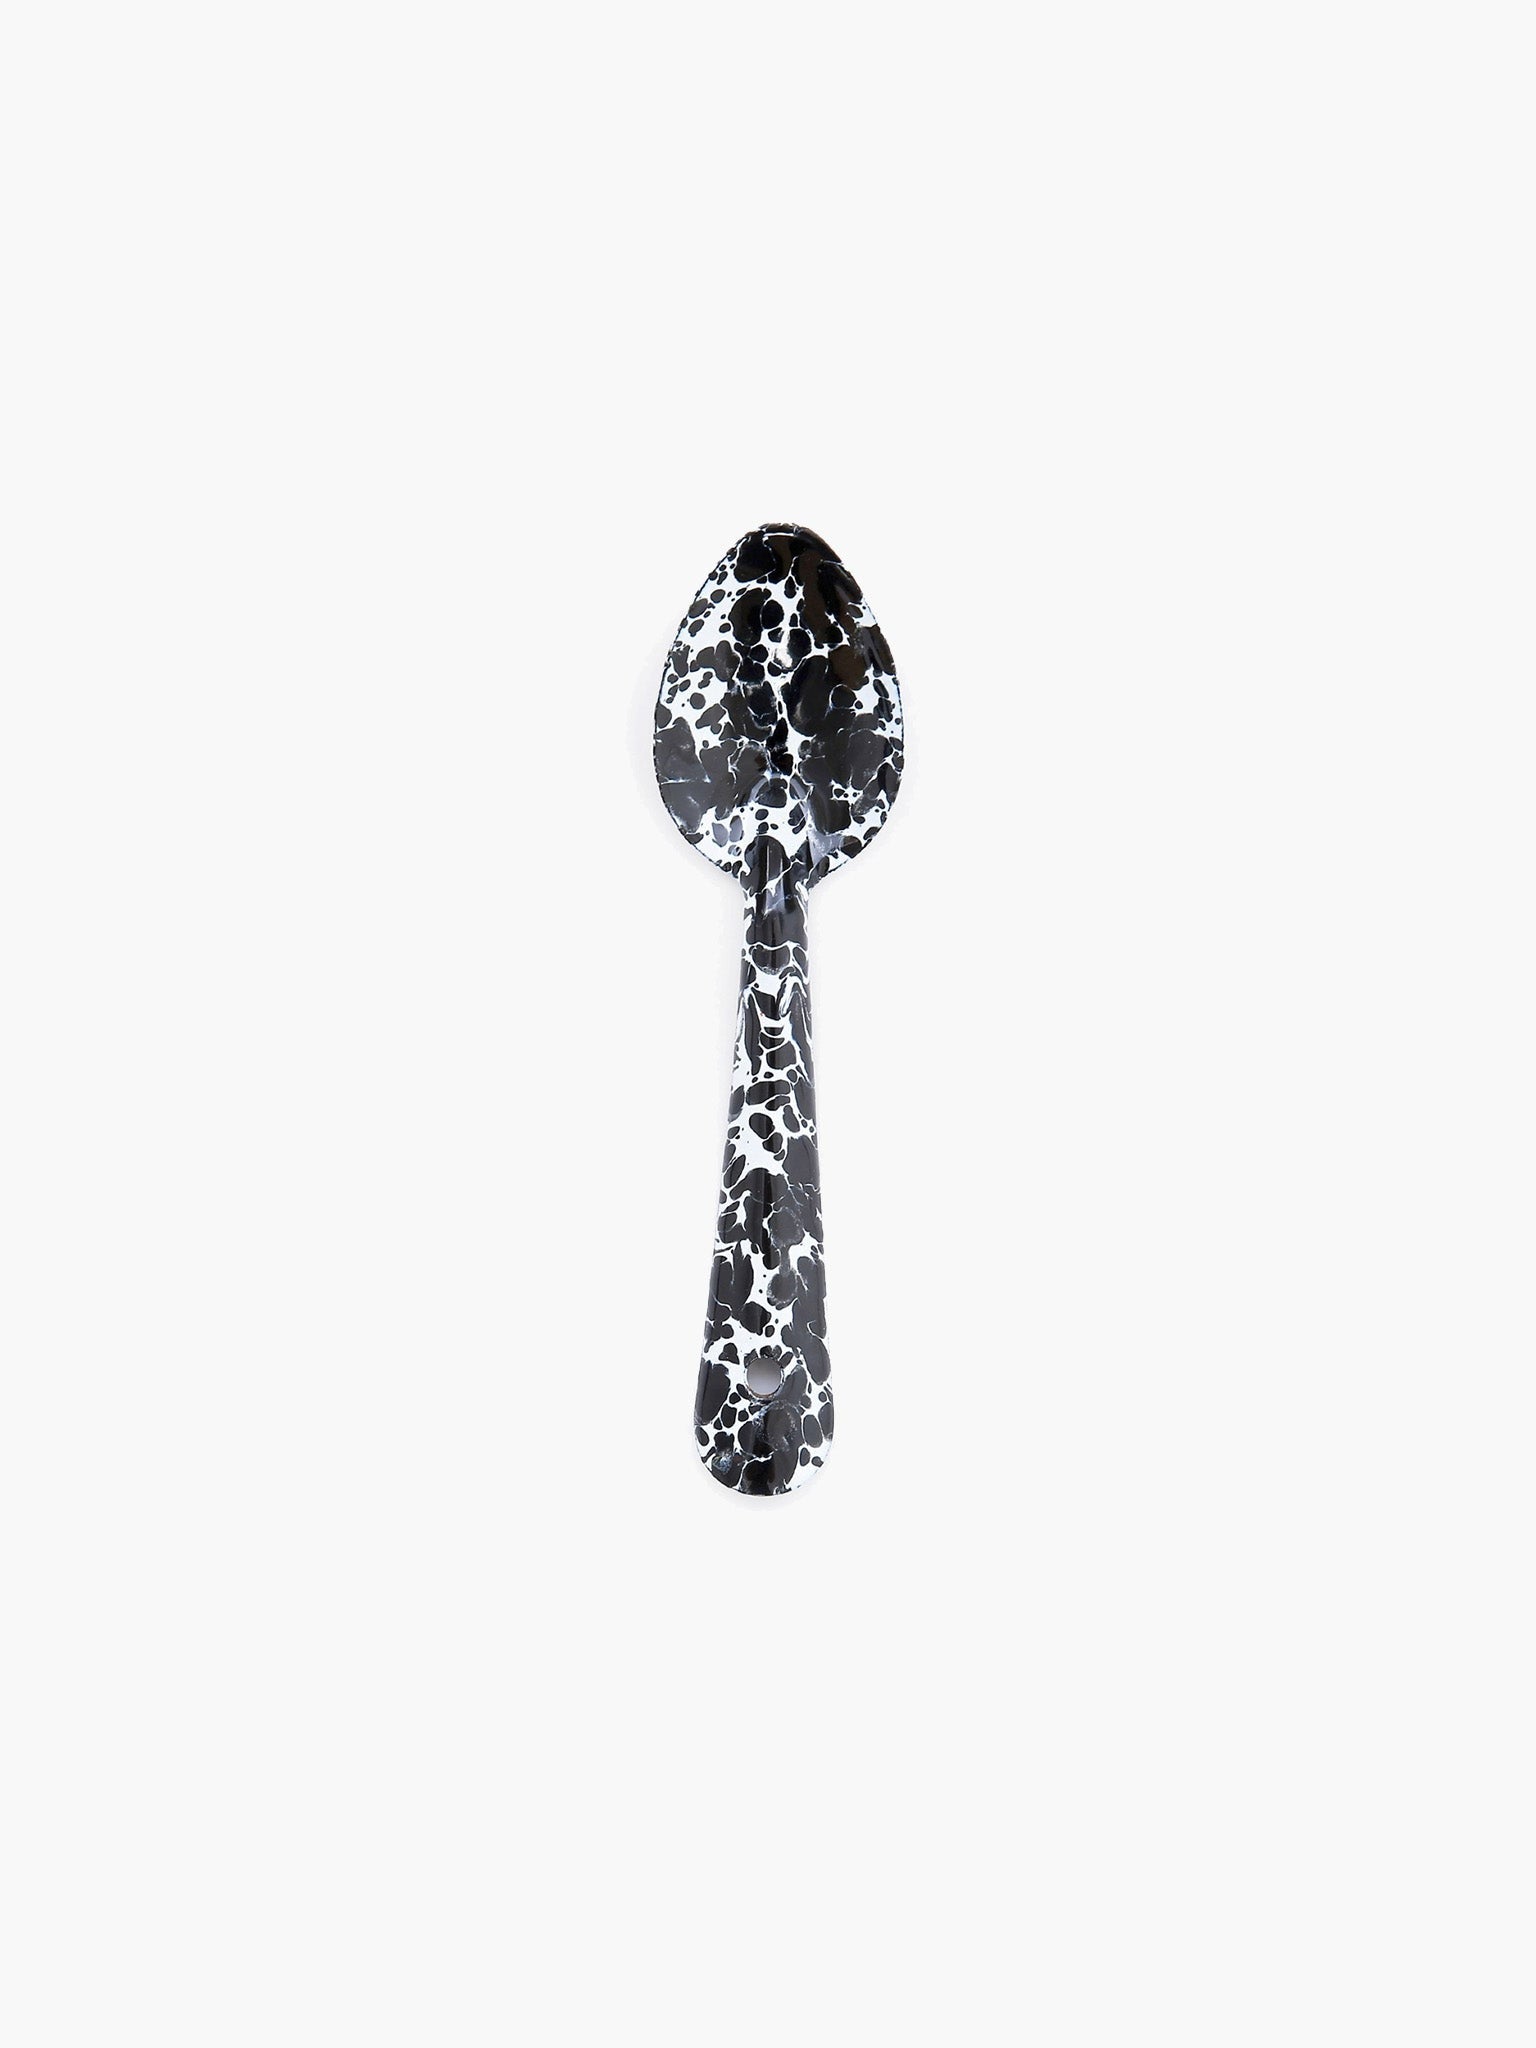 Splatter Small Spoon (15cm) - Black